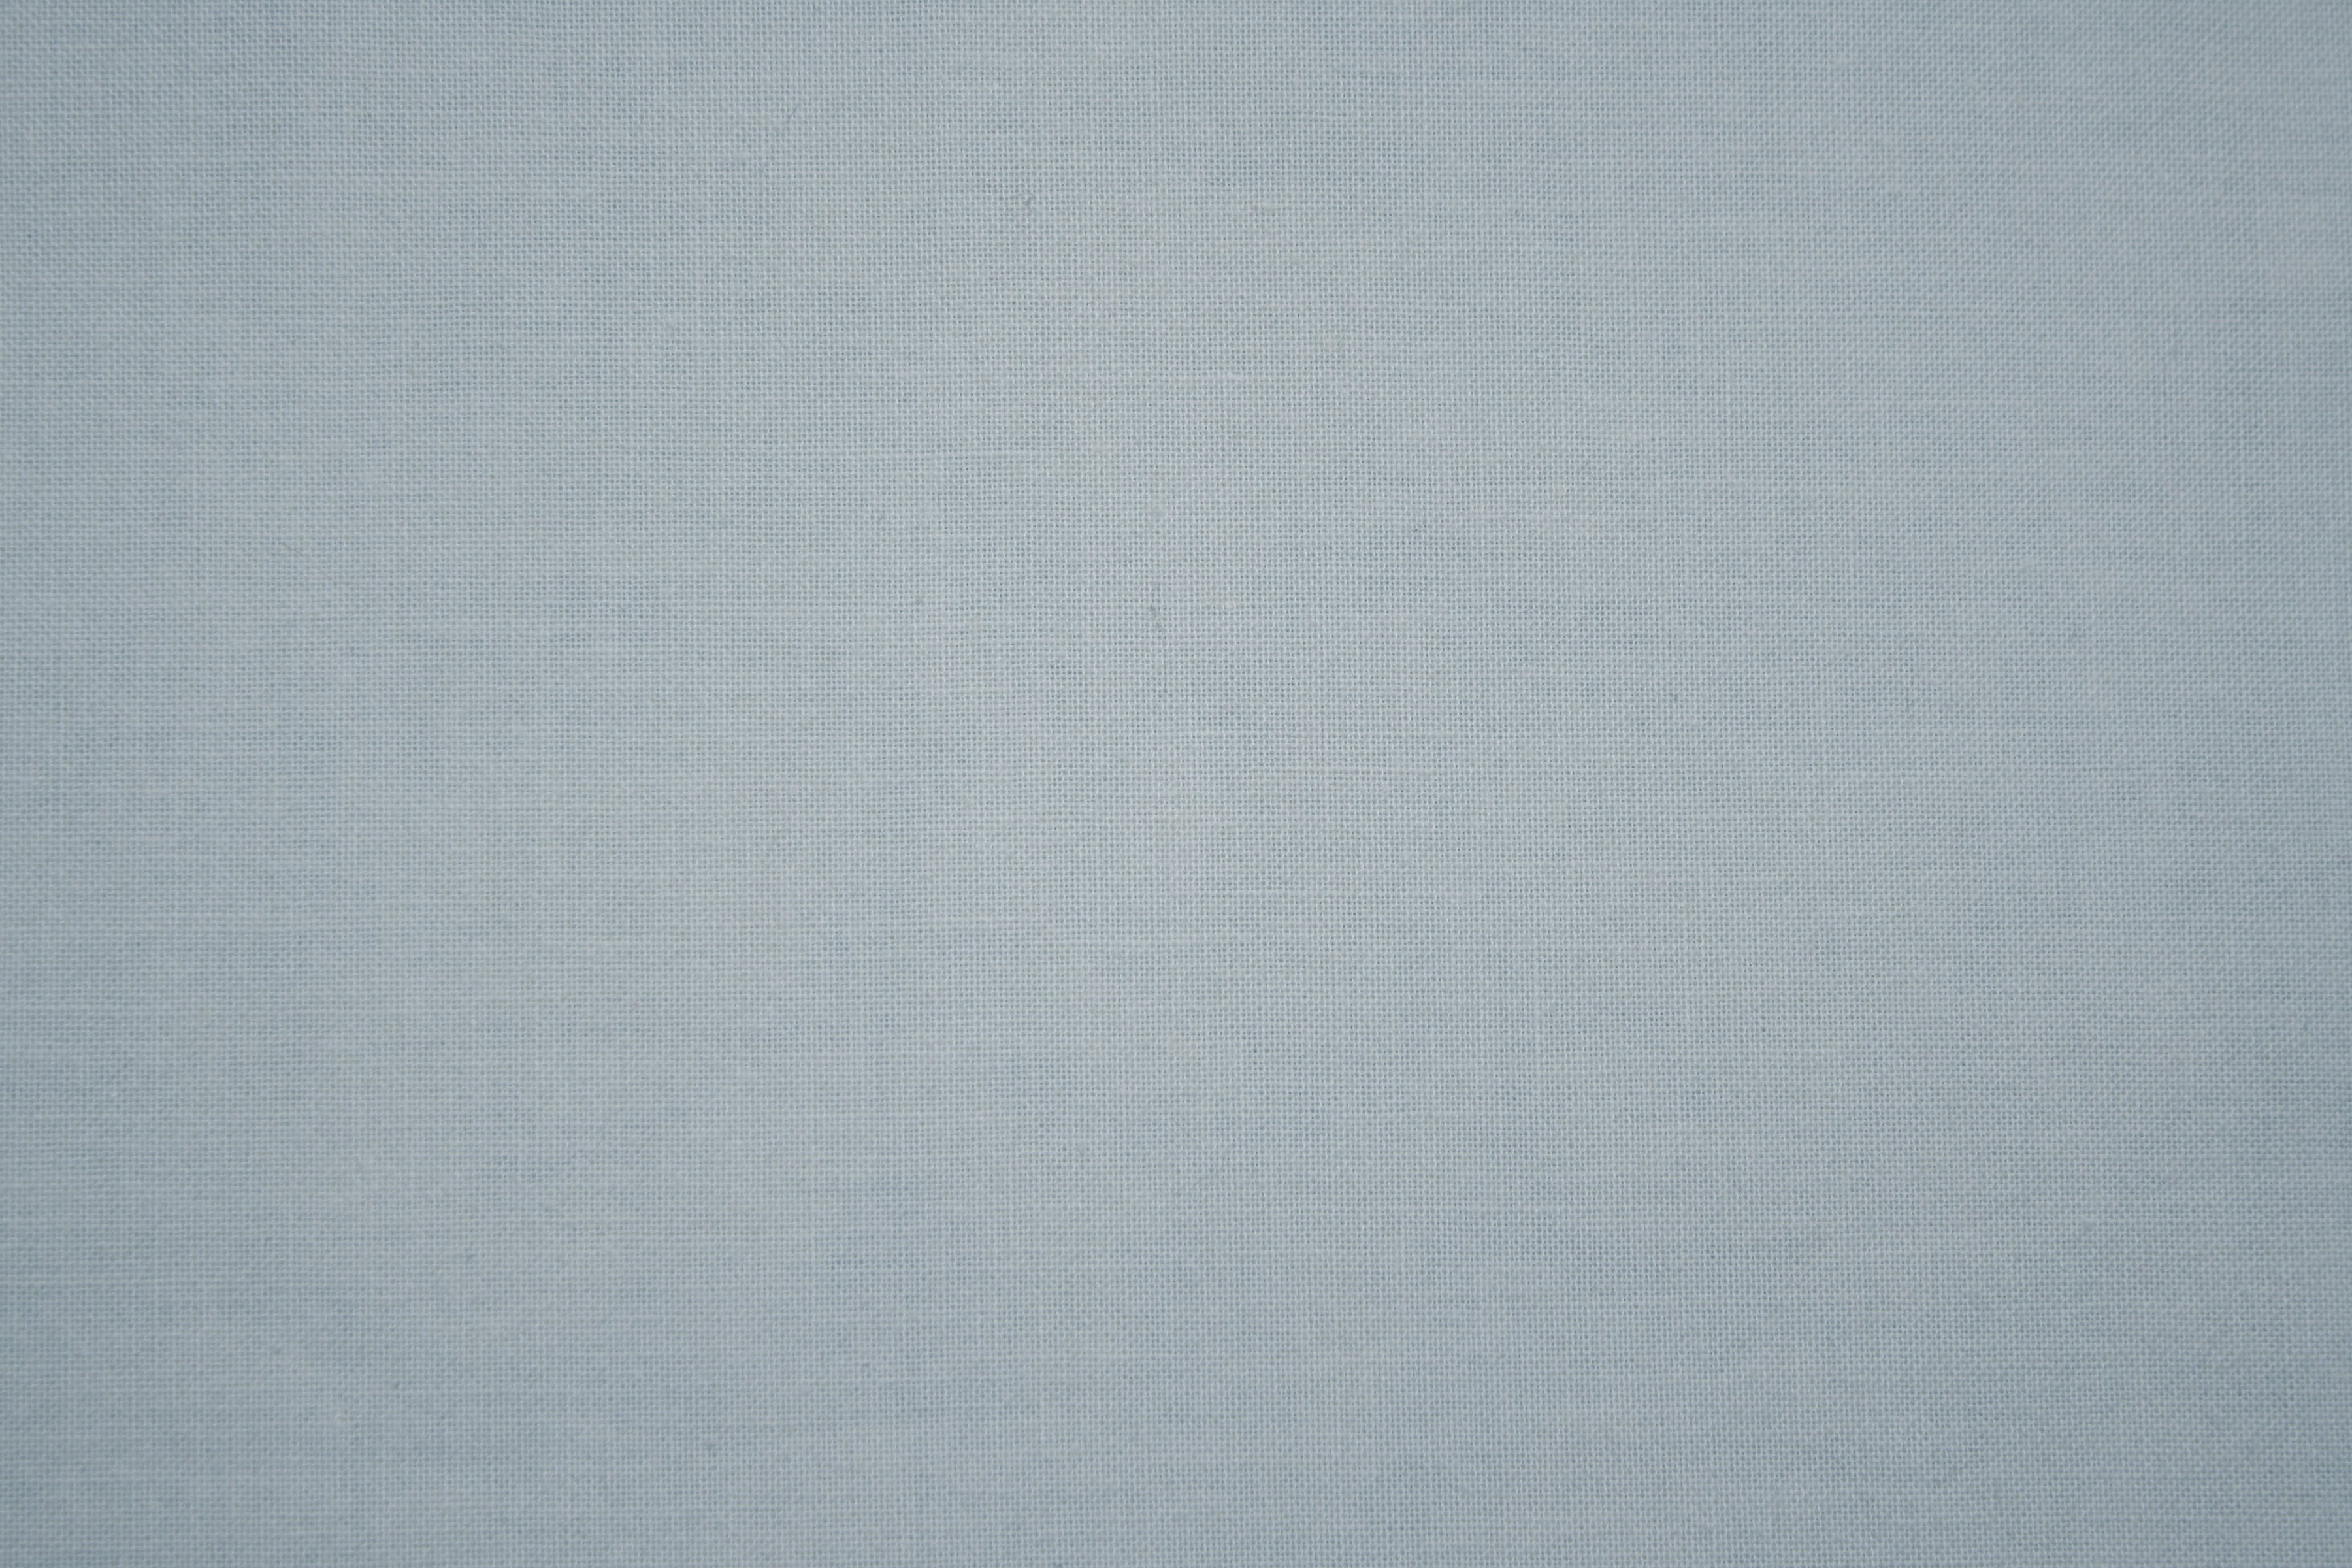 Blue Gray Canvas Fabric Texture Picture Photograph Photos 3600x2400